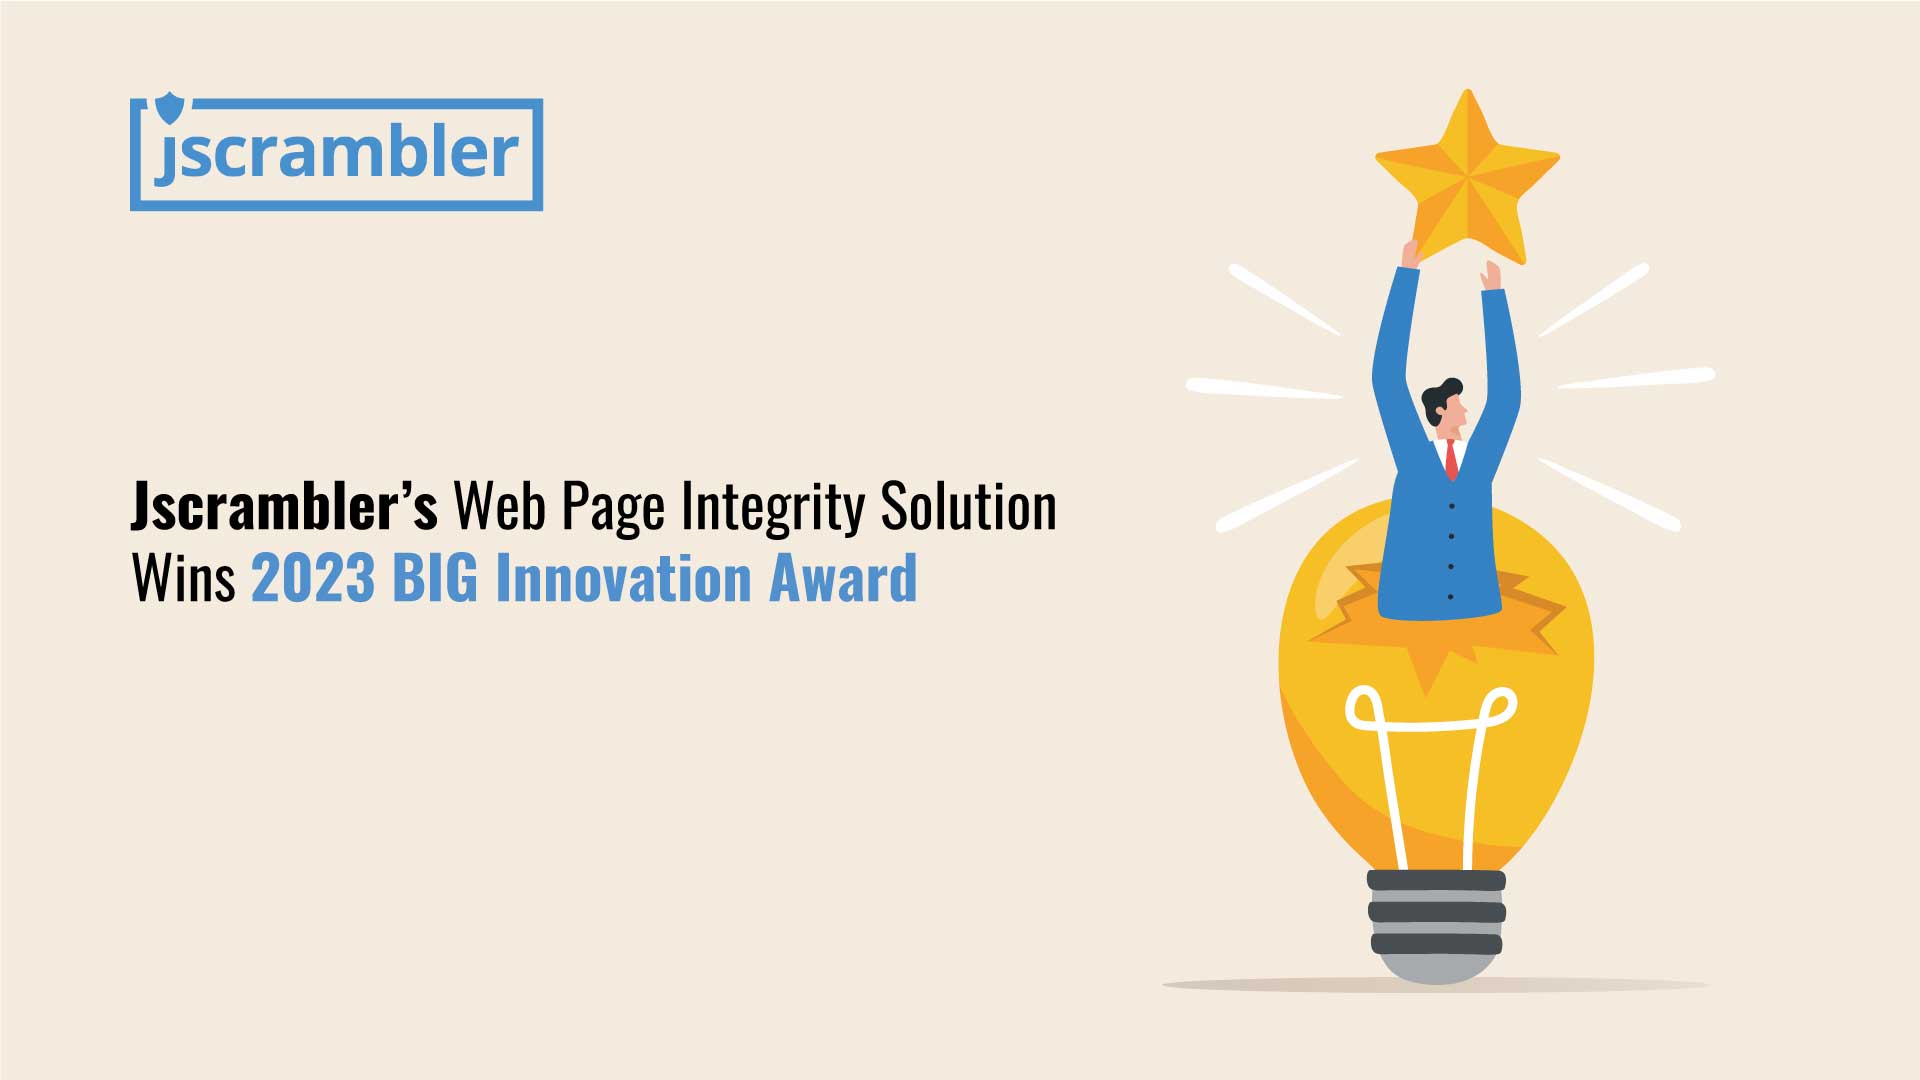 Jscrambler’s Web Page Integrity Solution Wins 2023 BIG Innovation Award